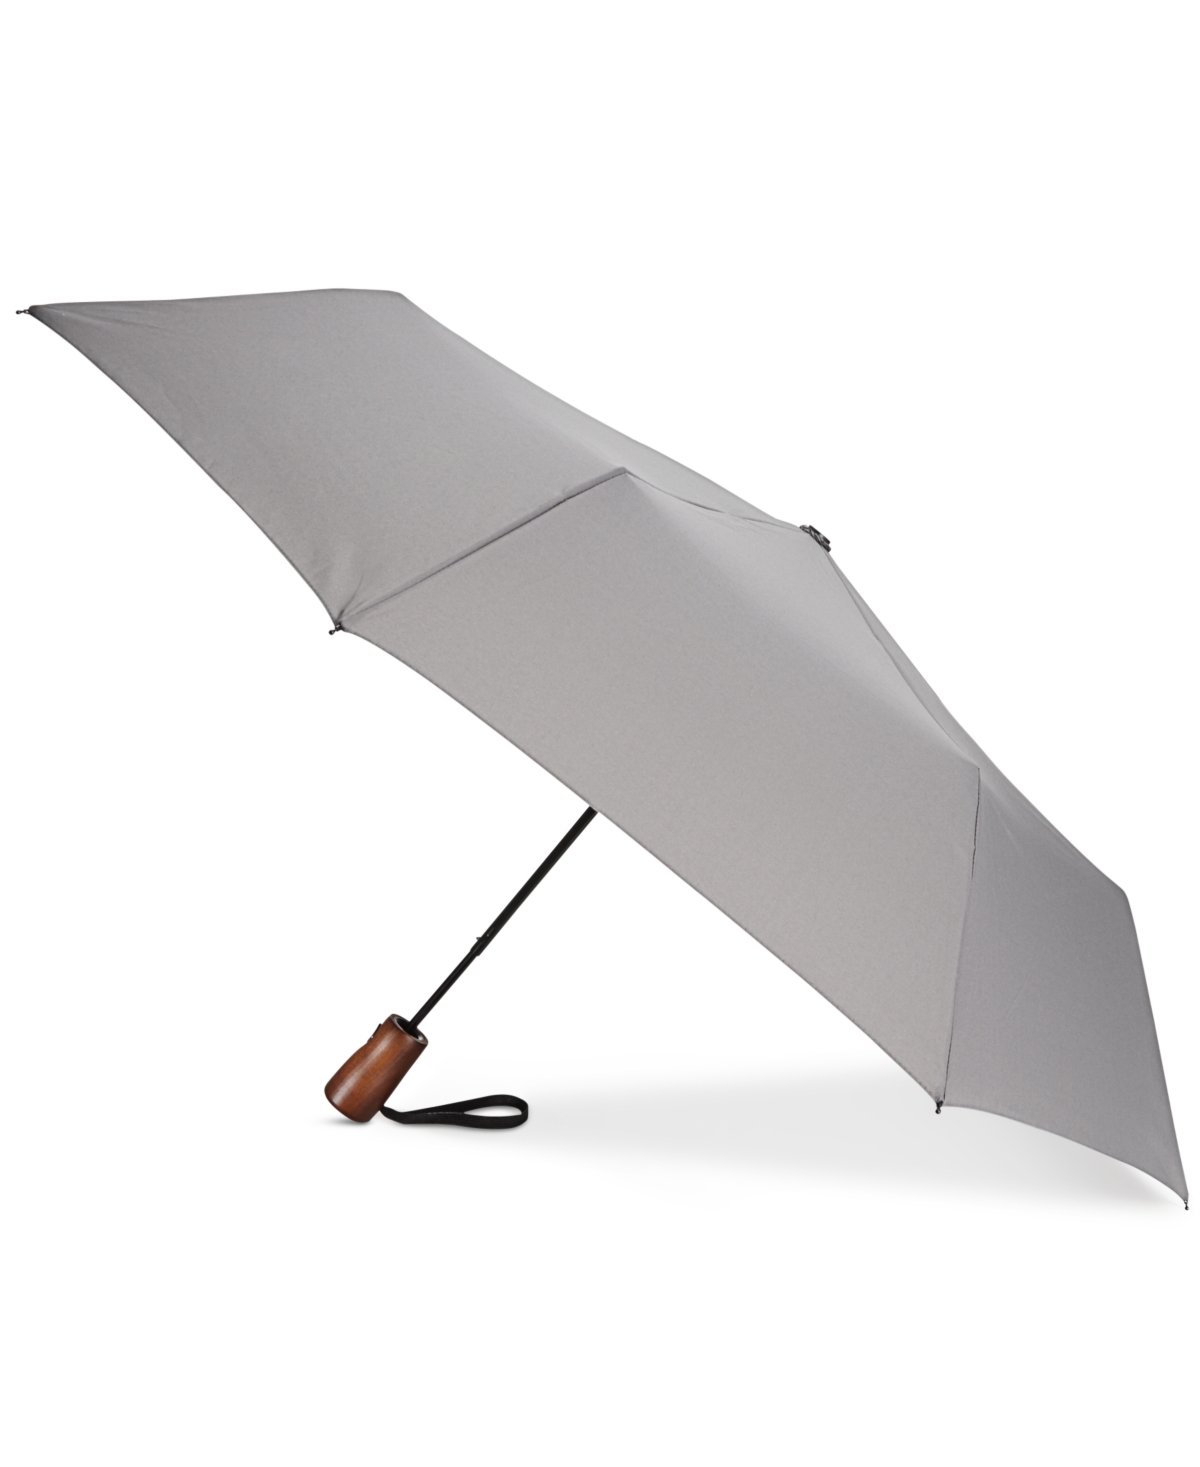 Automatic Compact Folding Umbrella - Charcoal